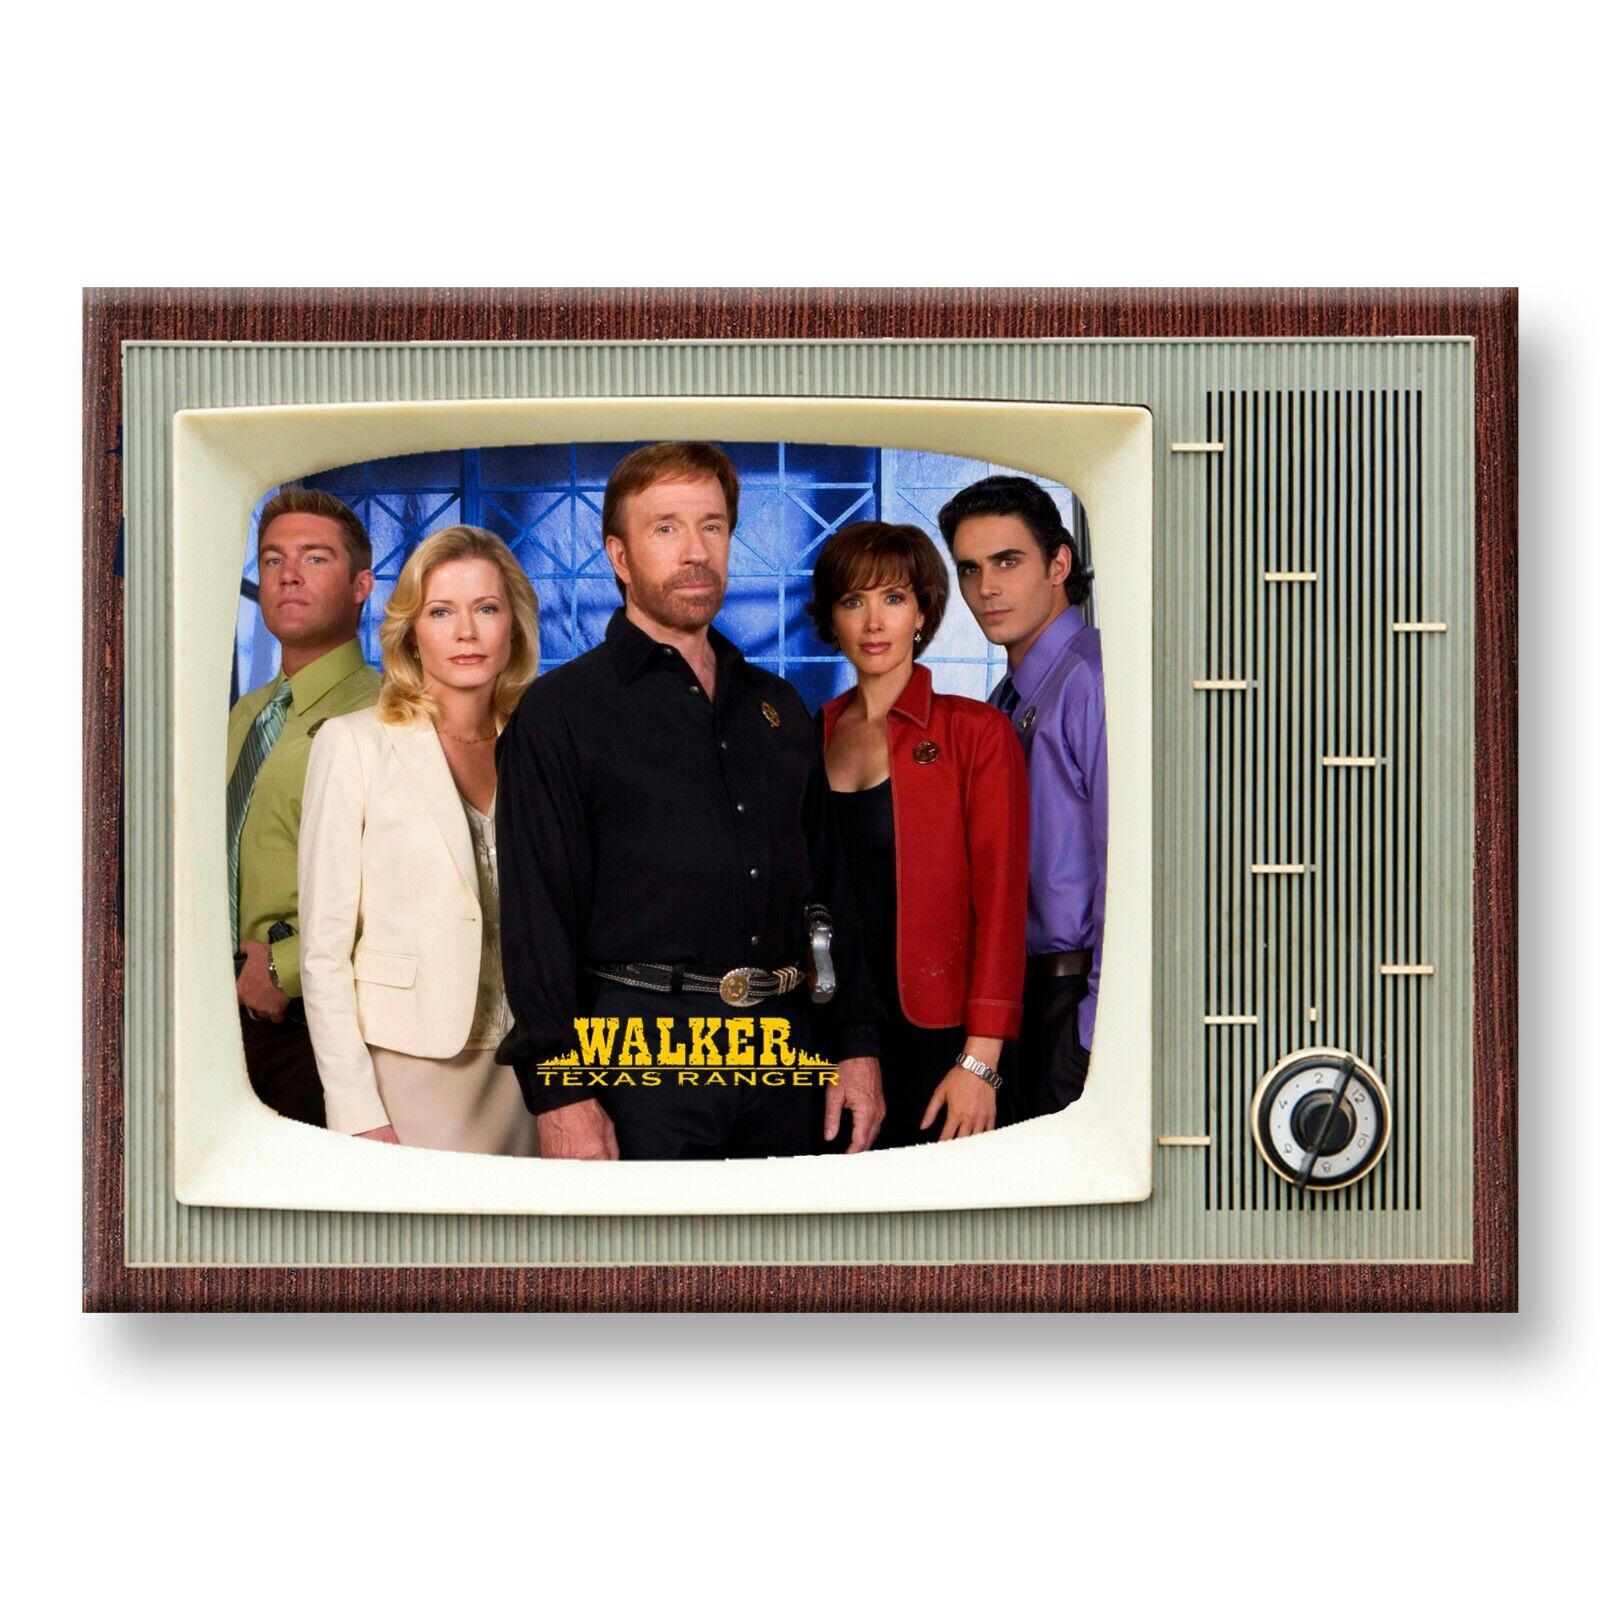 WALKER TEXAS RANGER TV Show Classic TV 3.5 inches x 2.5 inches FRIDGE MAGNET